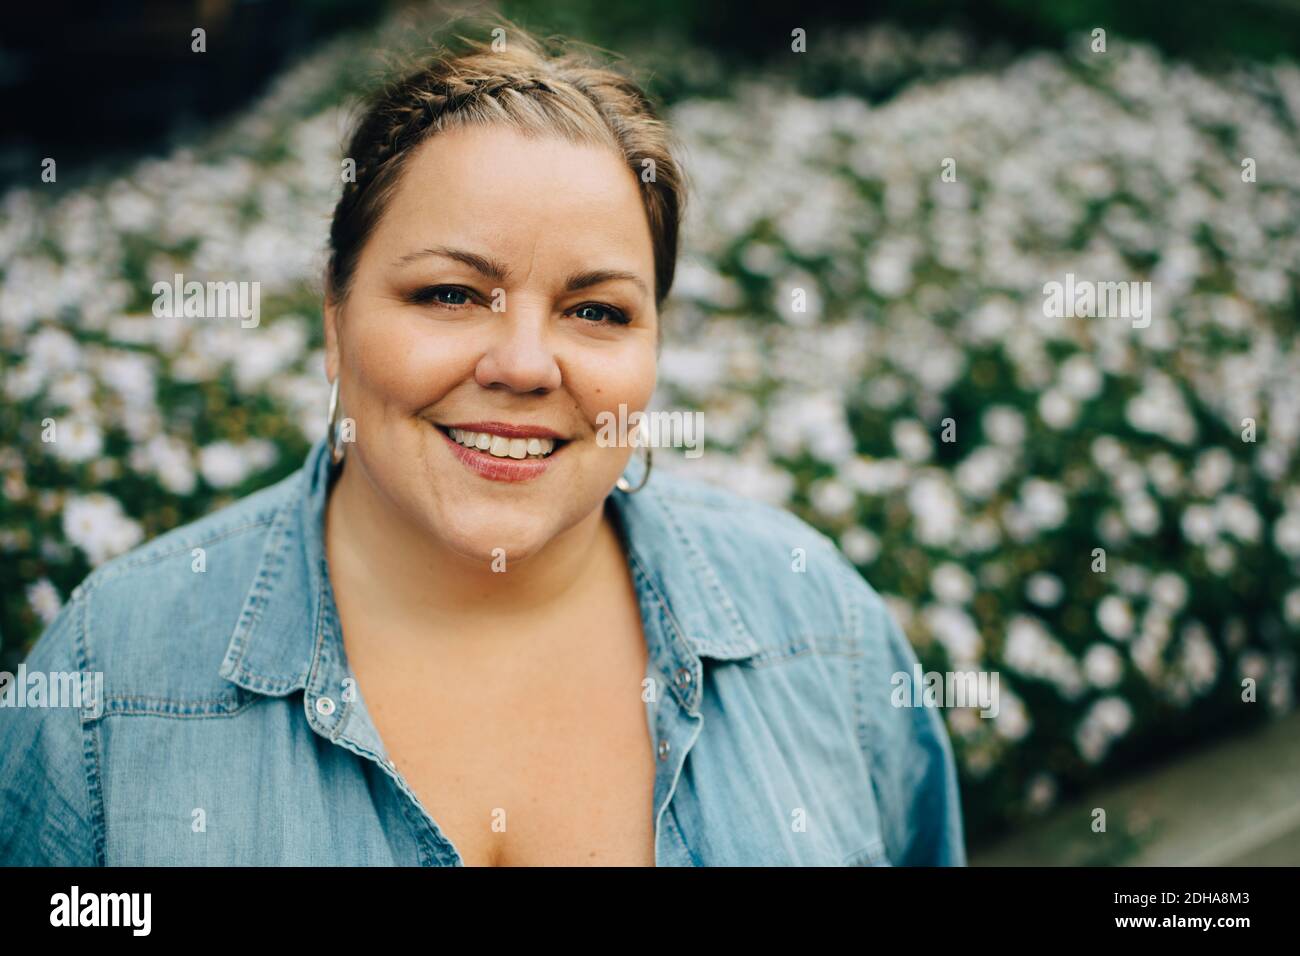 Portrait of smiling woman against flowering plants Stock Photo